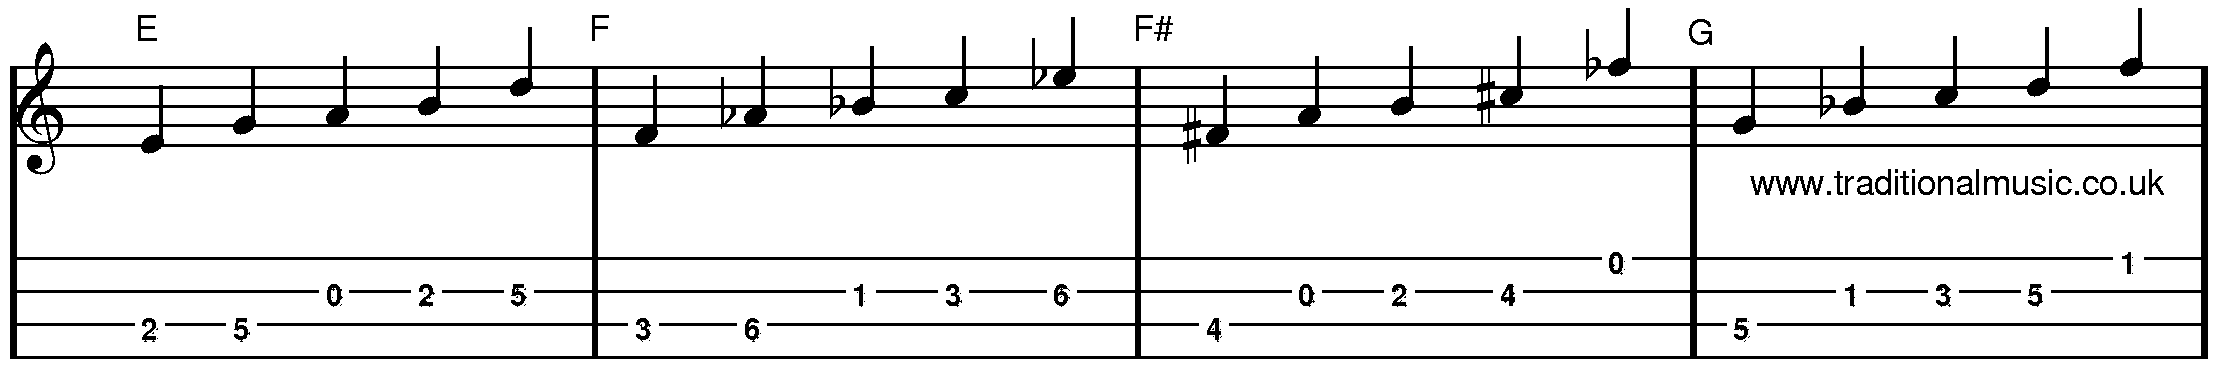 Minor Pentatonic Scales for Mandolin E to G